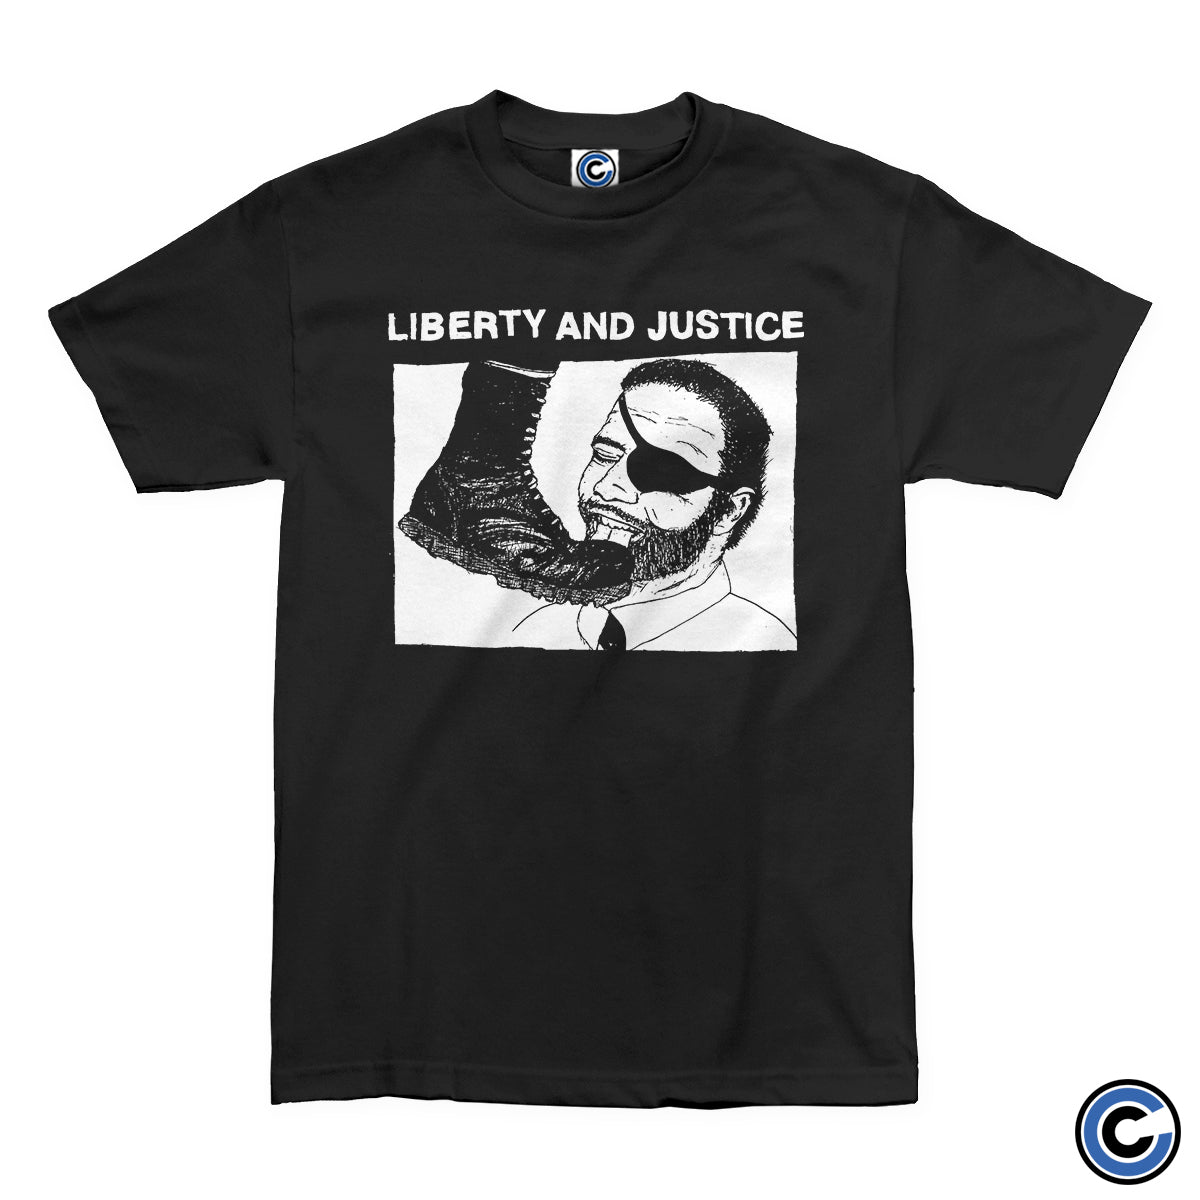 Liberty and Justice "Bootlicker" Shirt